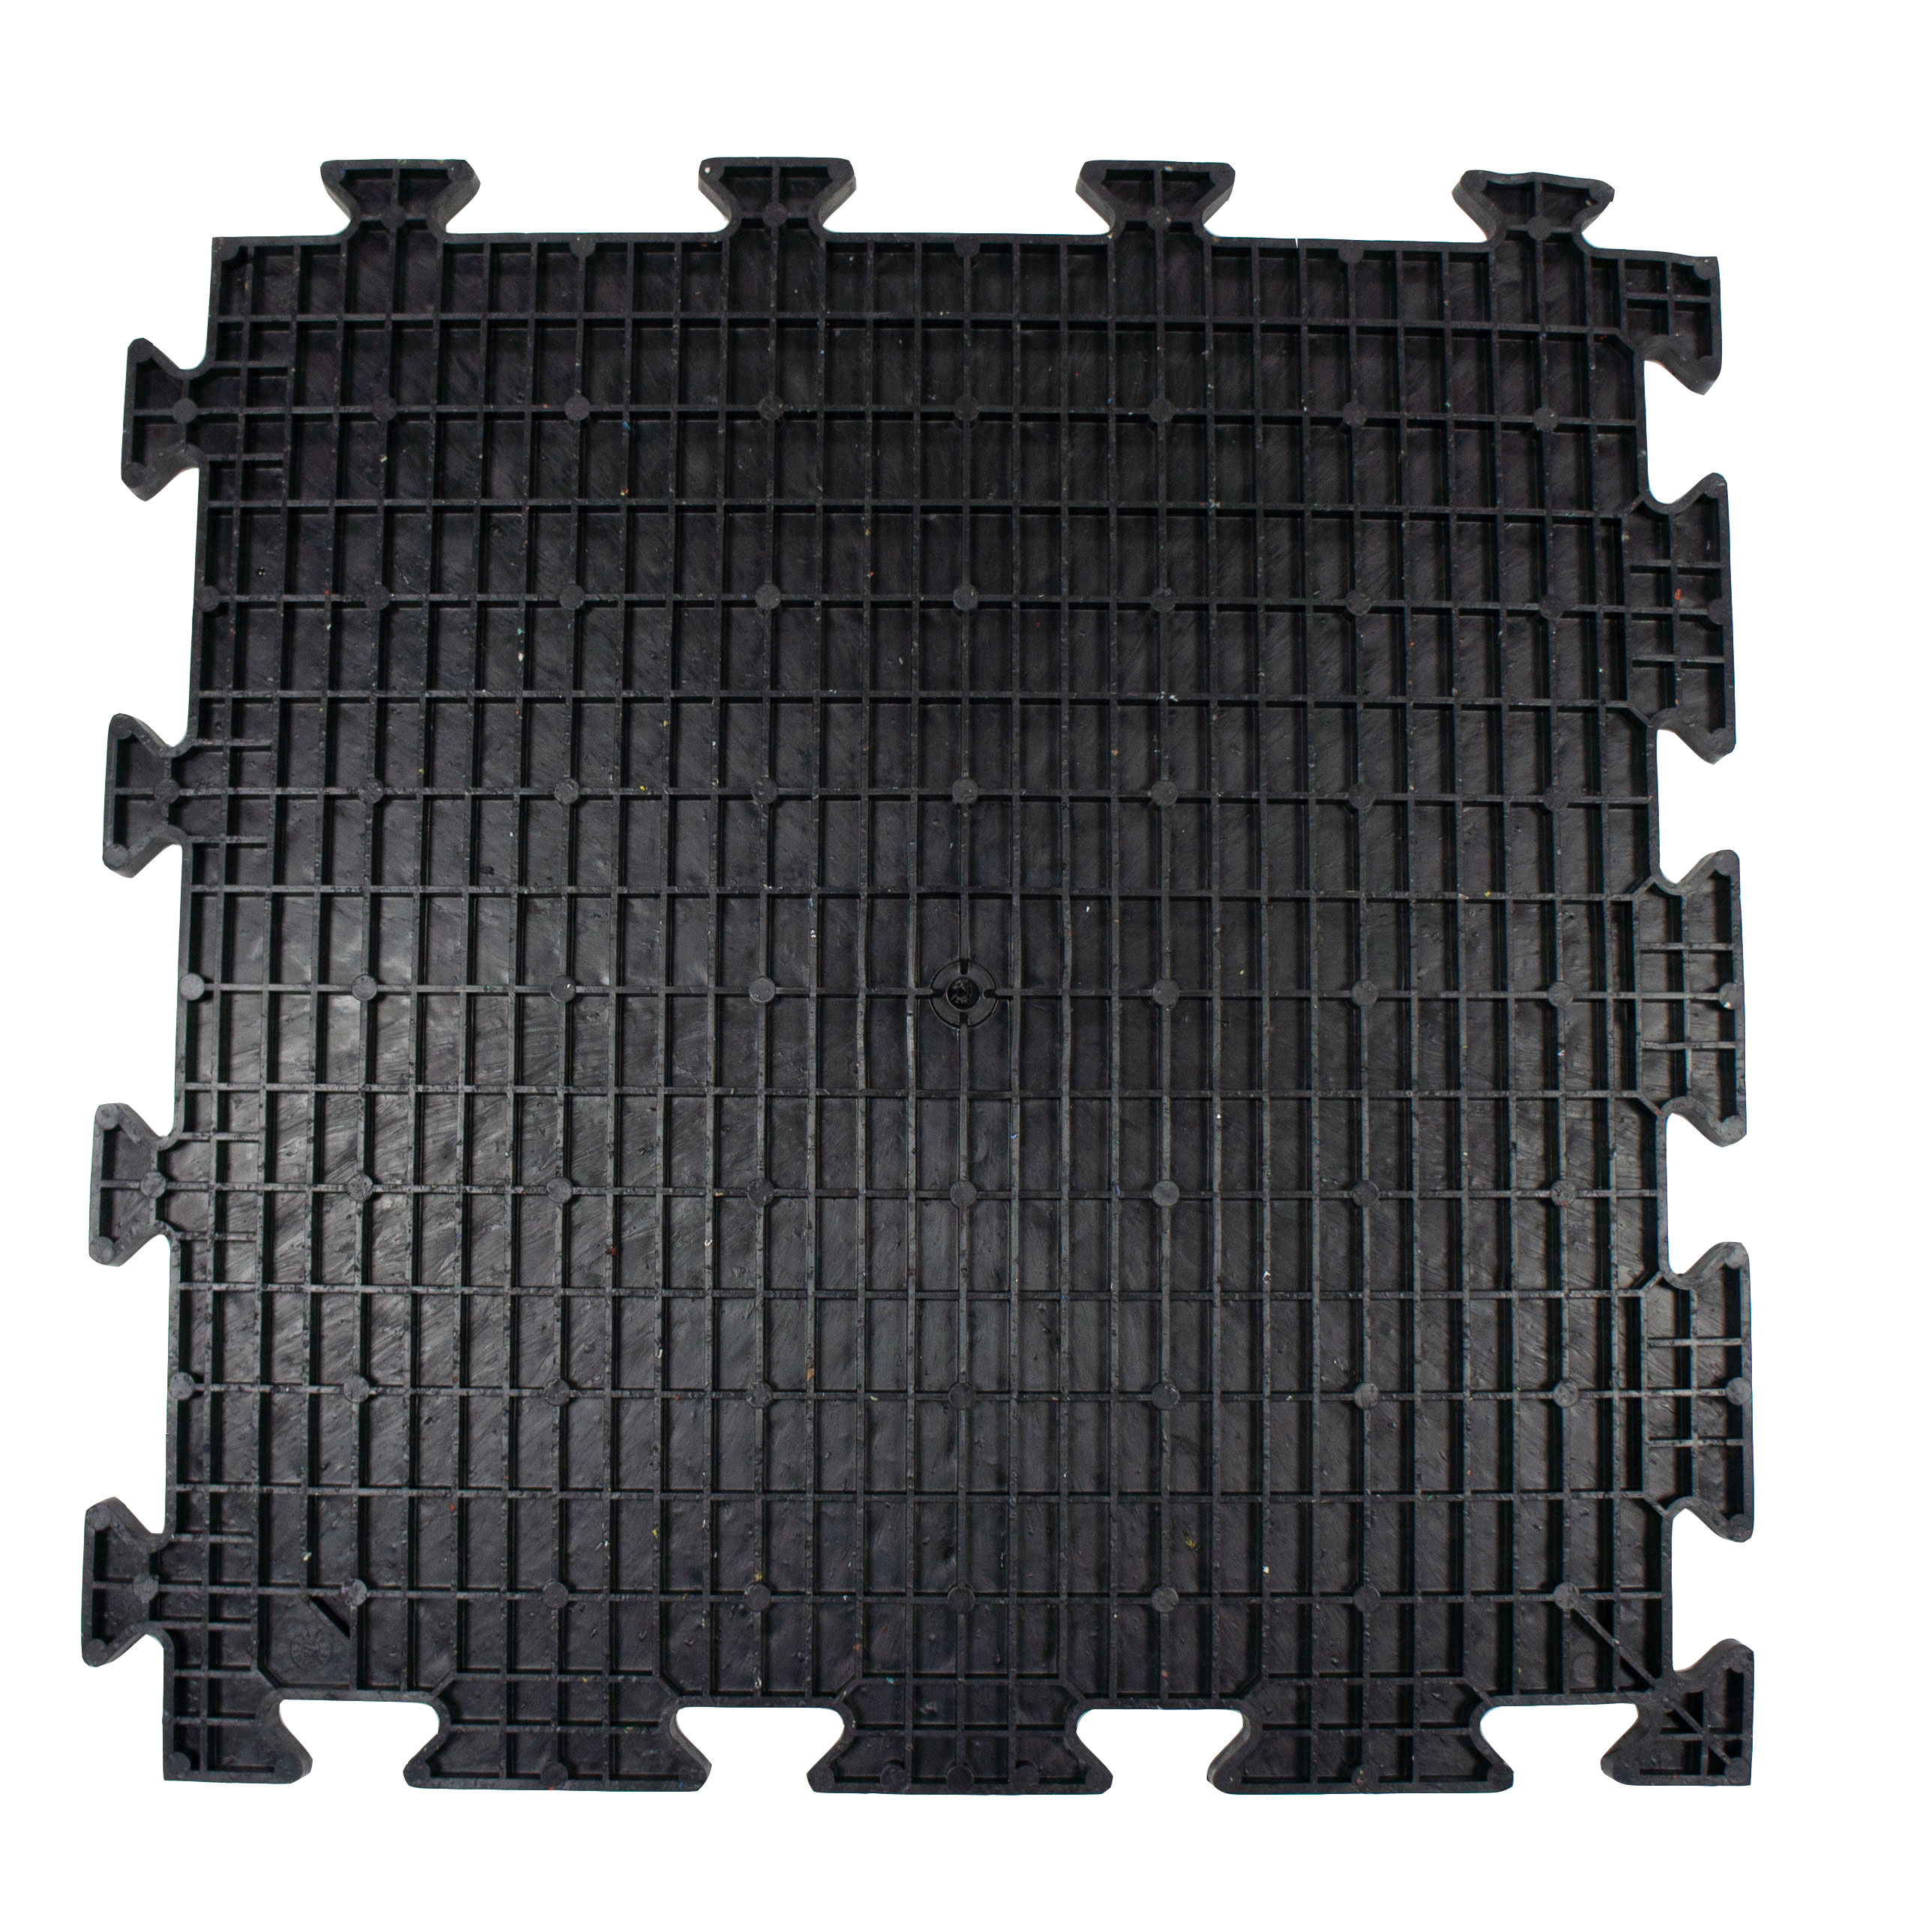 the Bottom side of MotoMat Anti-Fatigue Tile From Mototile